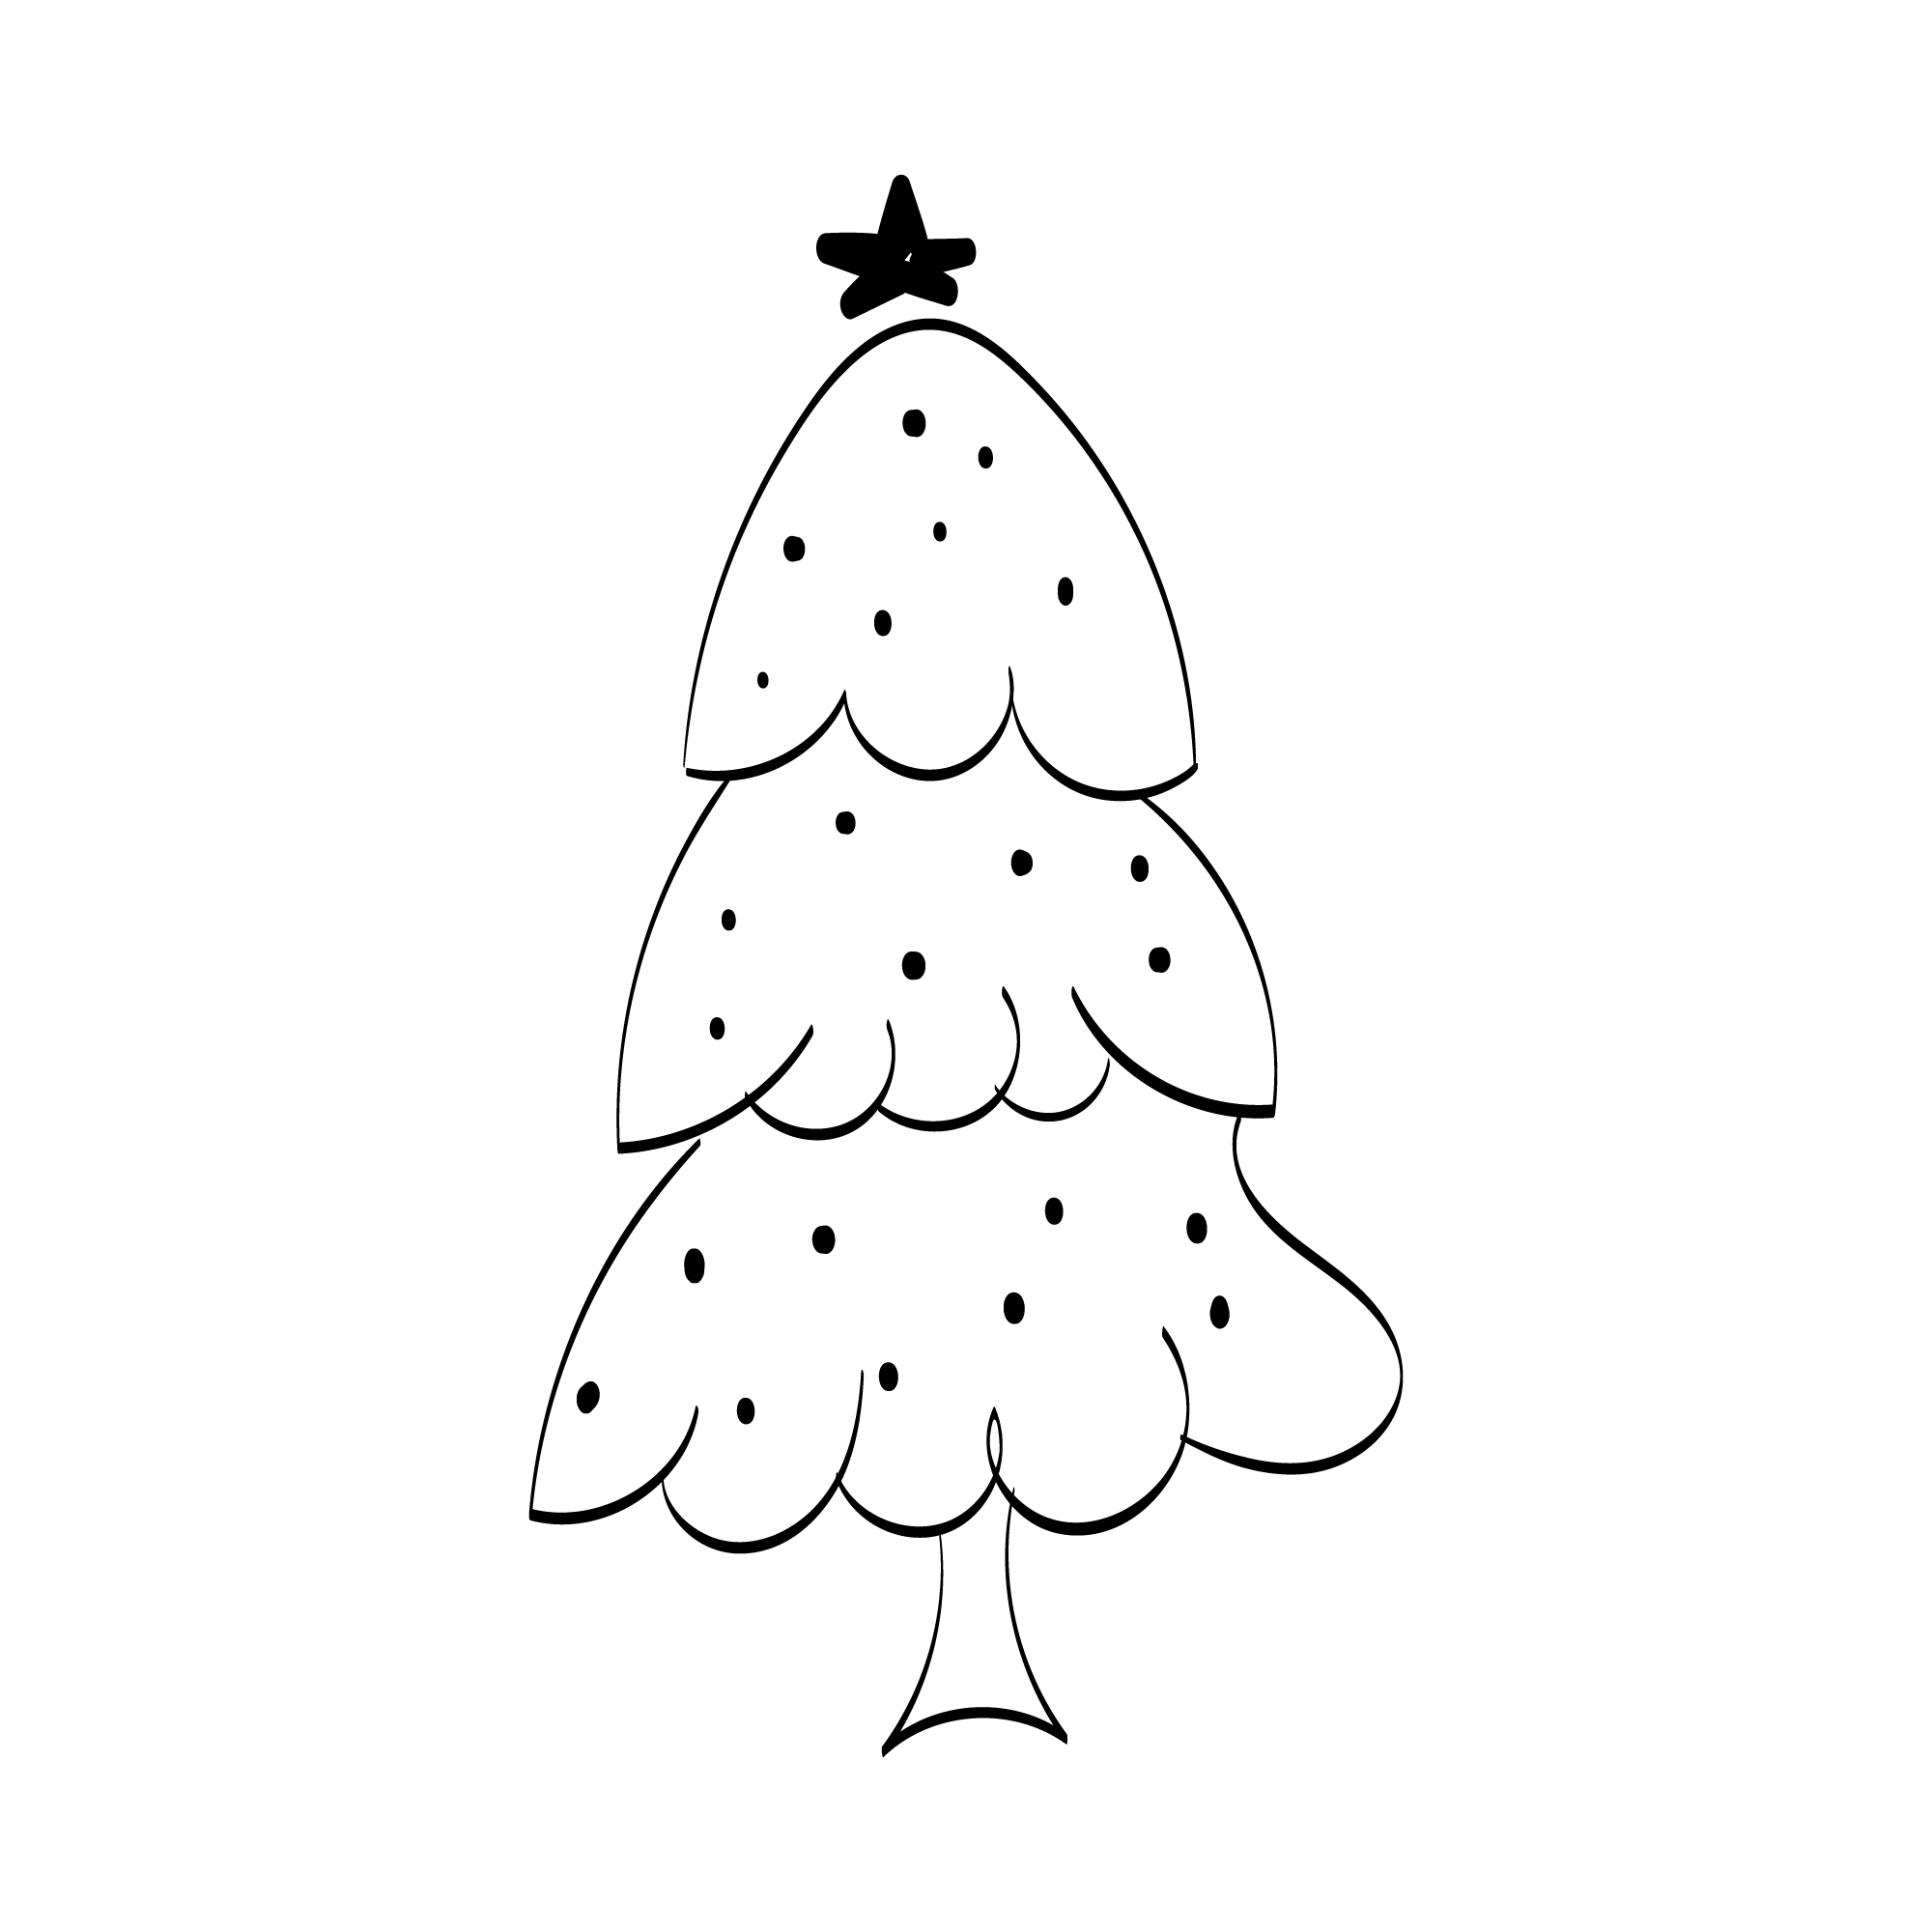 Christmas Tree Design preview image.